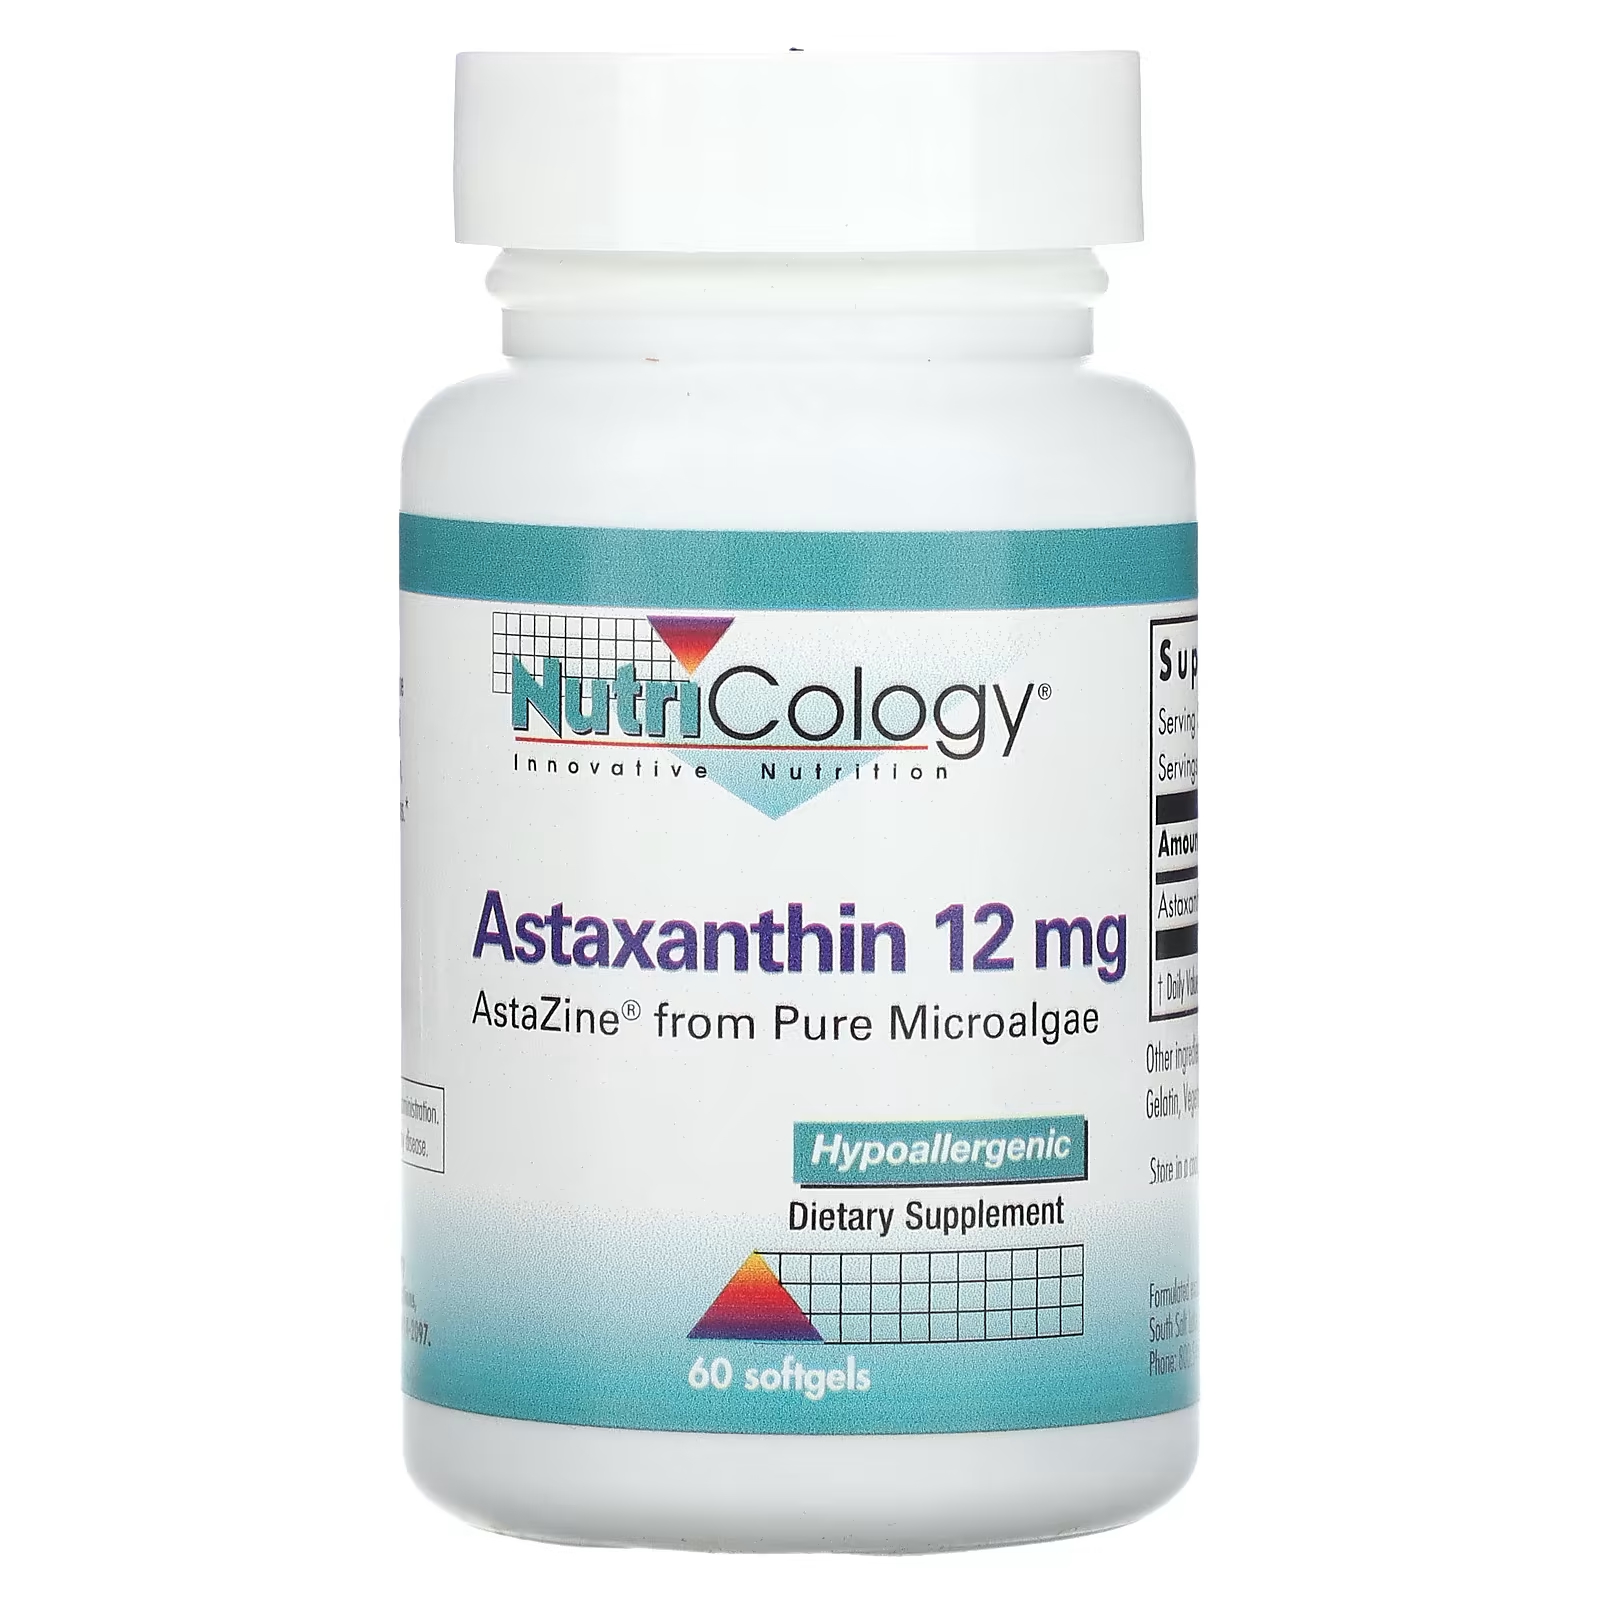 Пищевая добавка Nutricology Астаксантин 12 мг, 60 мягких таблеток algalife исландский астаксантин 12 мг 60 мягких мини таблеток